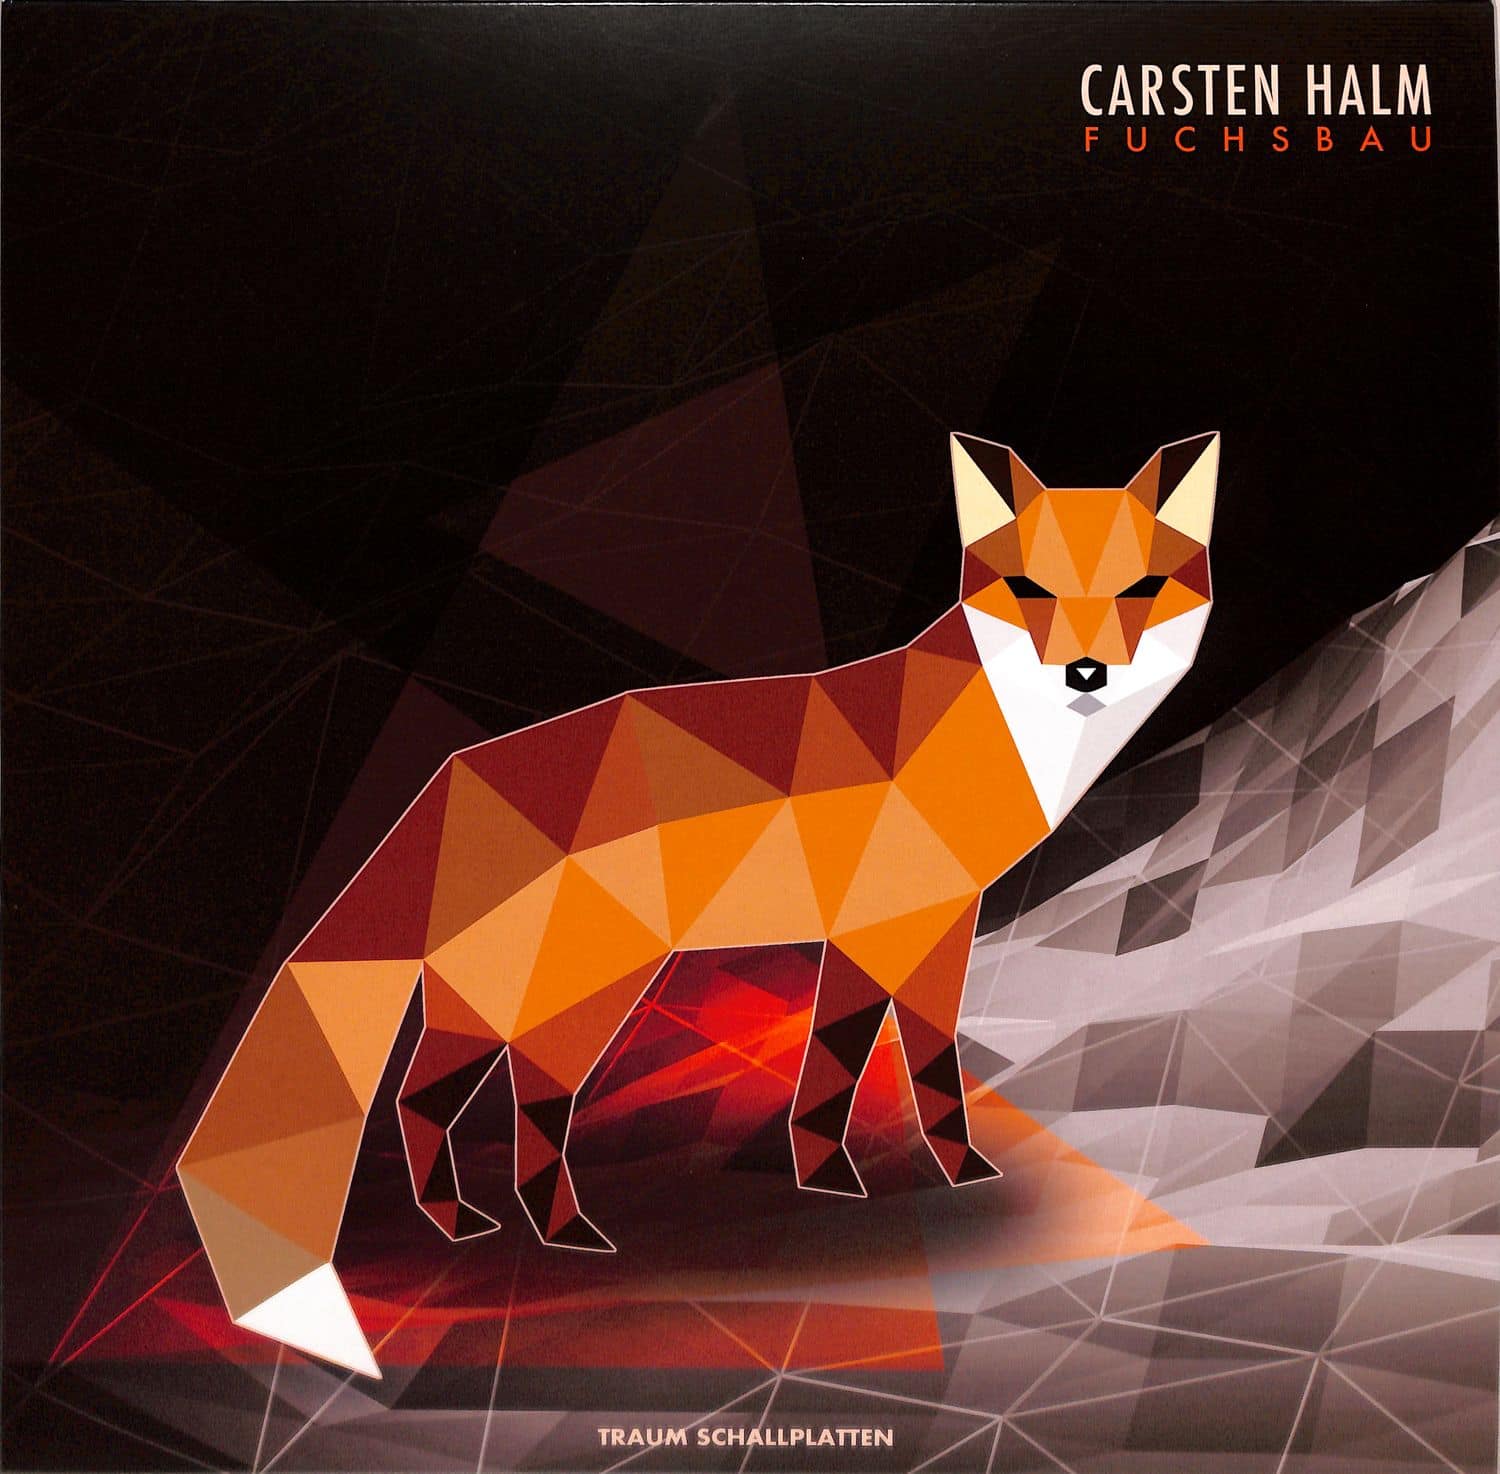 Carsten Halm - FUCHSBAU EP